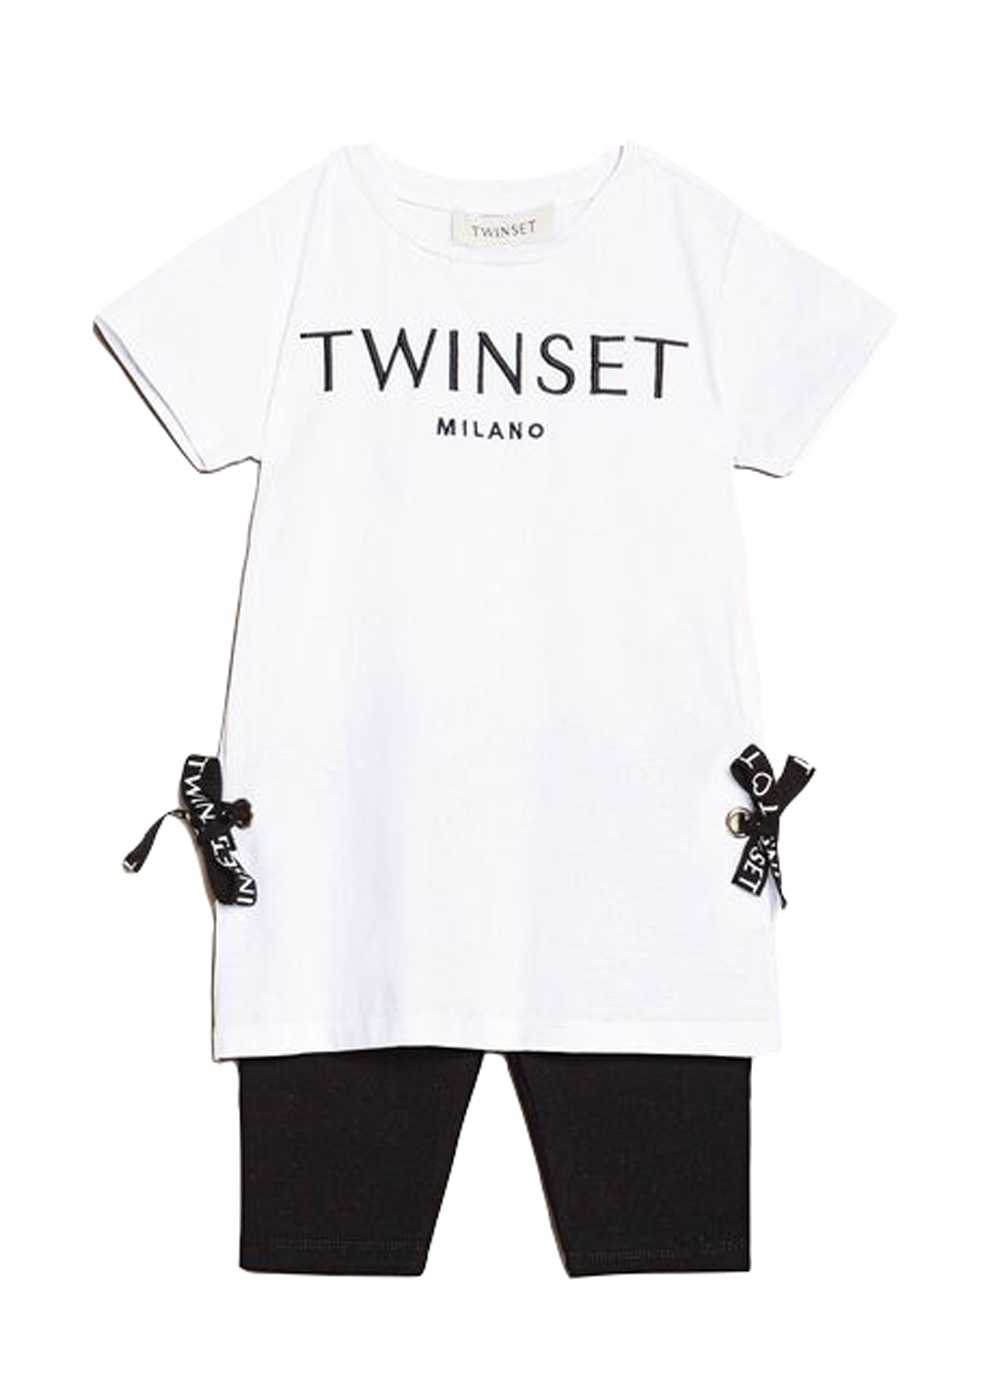 Featured image for “Twinset Maxi T-shirt e leggins”